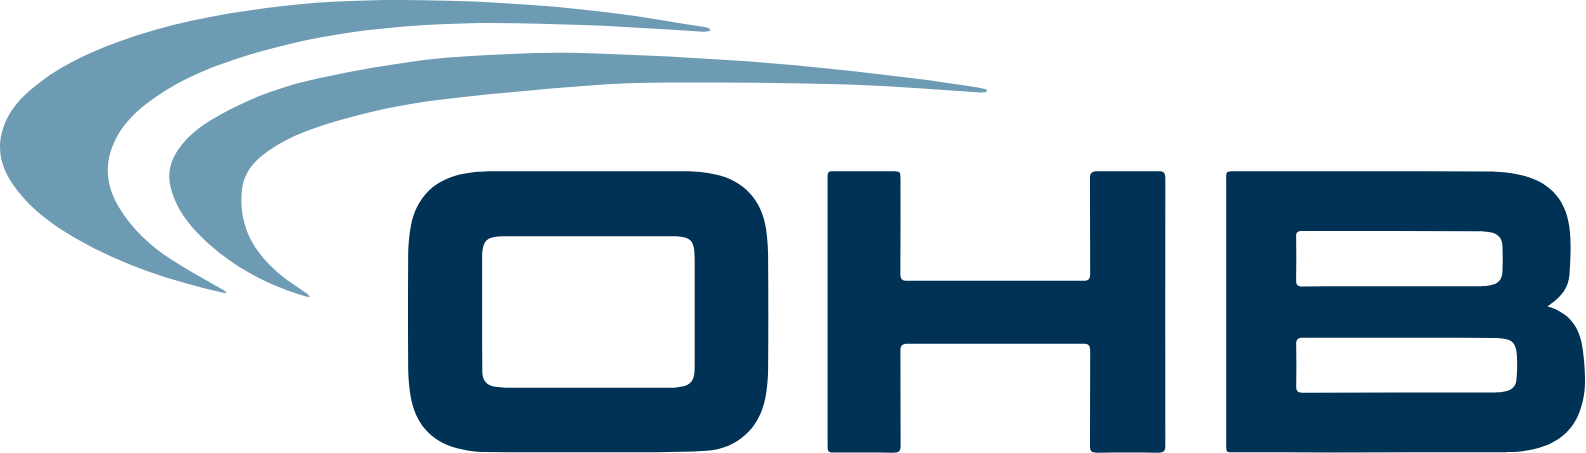 OHB SE logo large (transparent PNG)